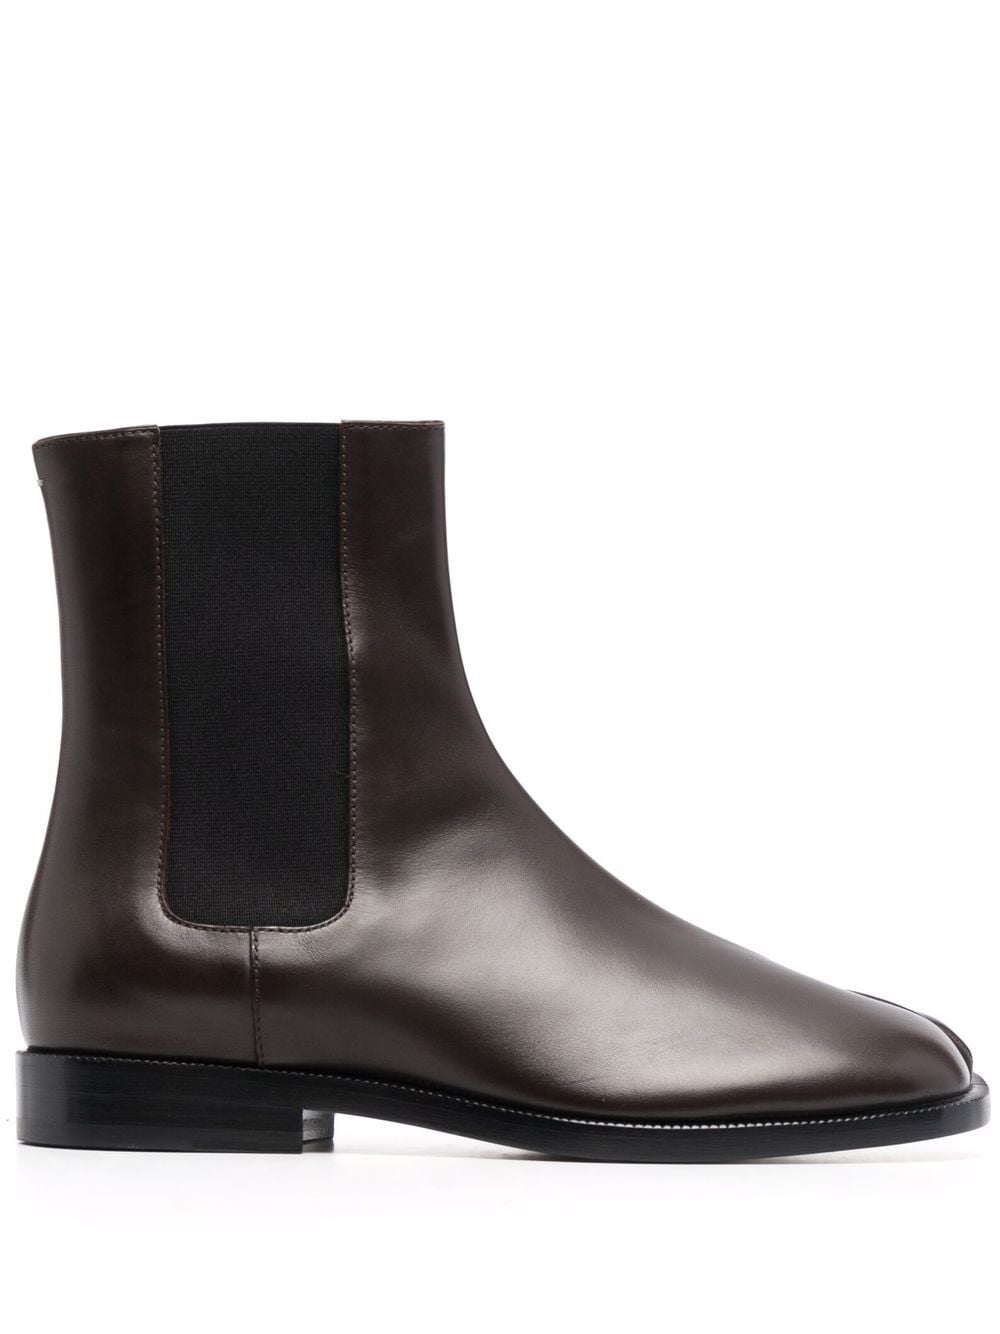 Image 1 of Maison Margiela Tabi leather Chelsea boots